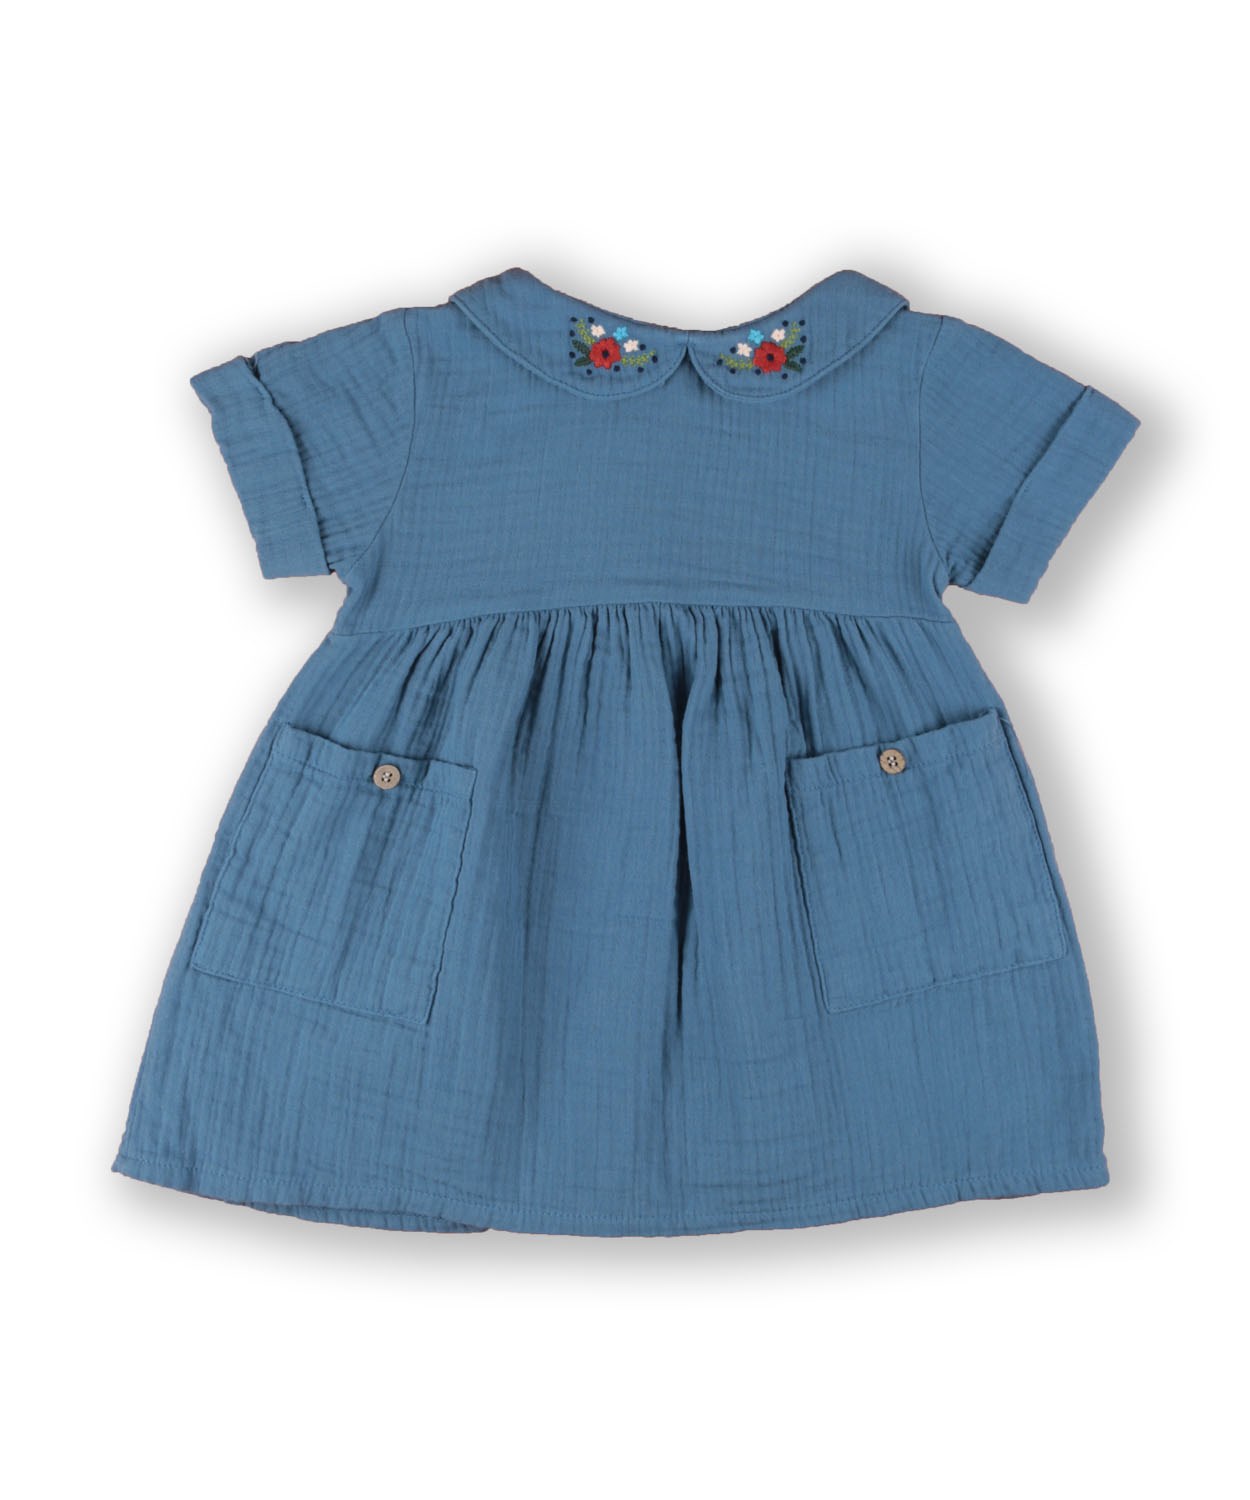 Collar Flower Embroidered Baby Girl Dress 1-4 Age Indigo Blue